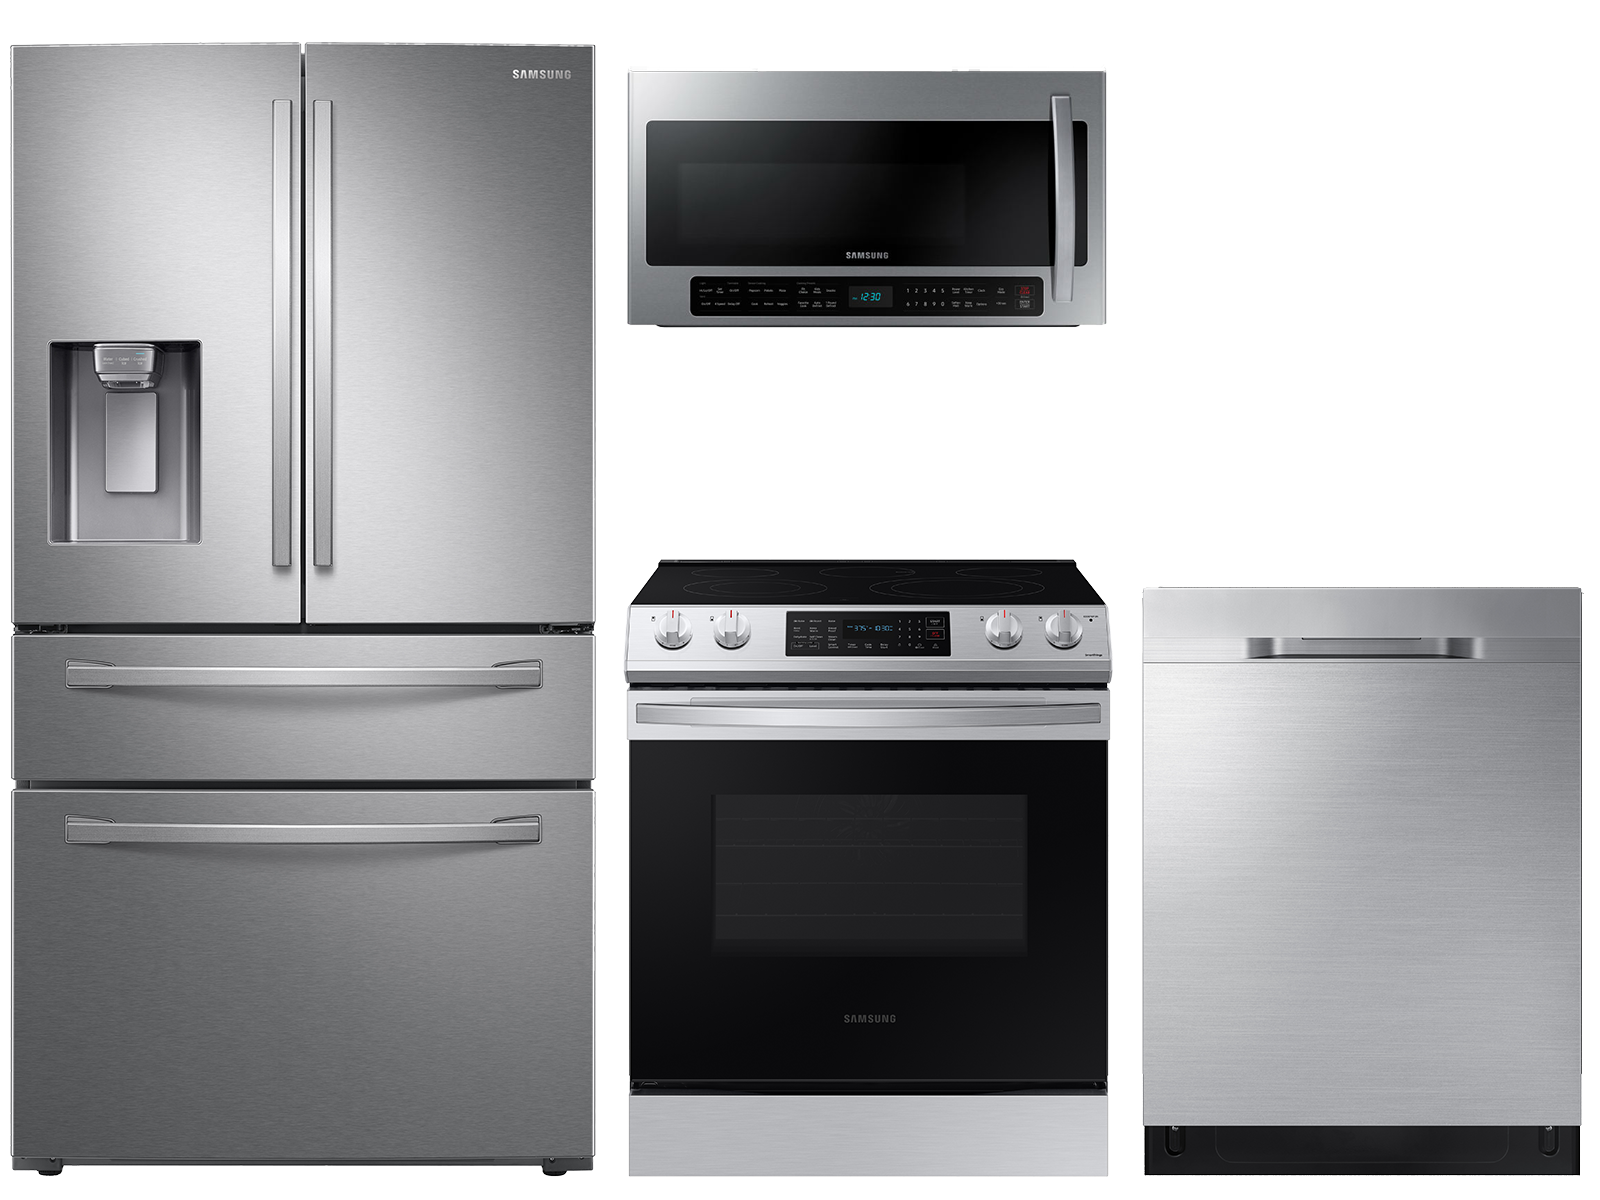 Samsung 23 cu. ft. counter depth 4-door refrigerator, 6.3 cu. ft. electric range, 2.1 cu. ft. microwave and 48 dBA dishwasher package